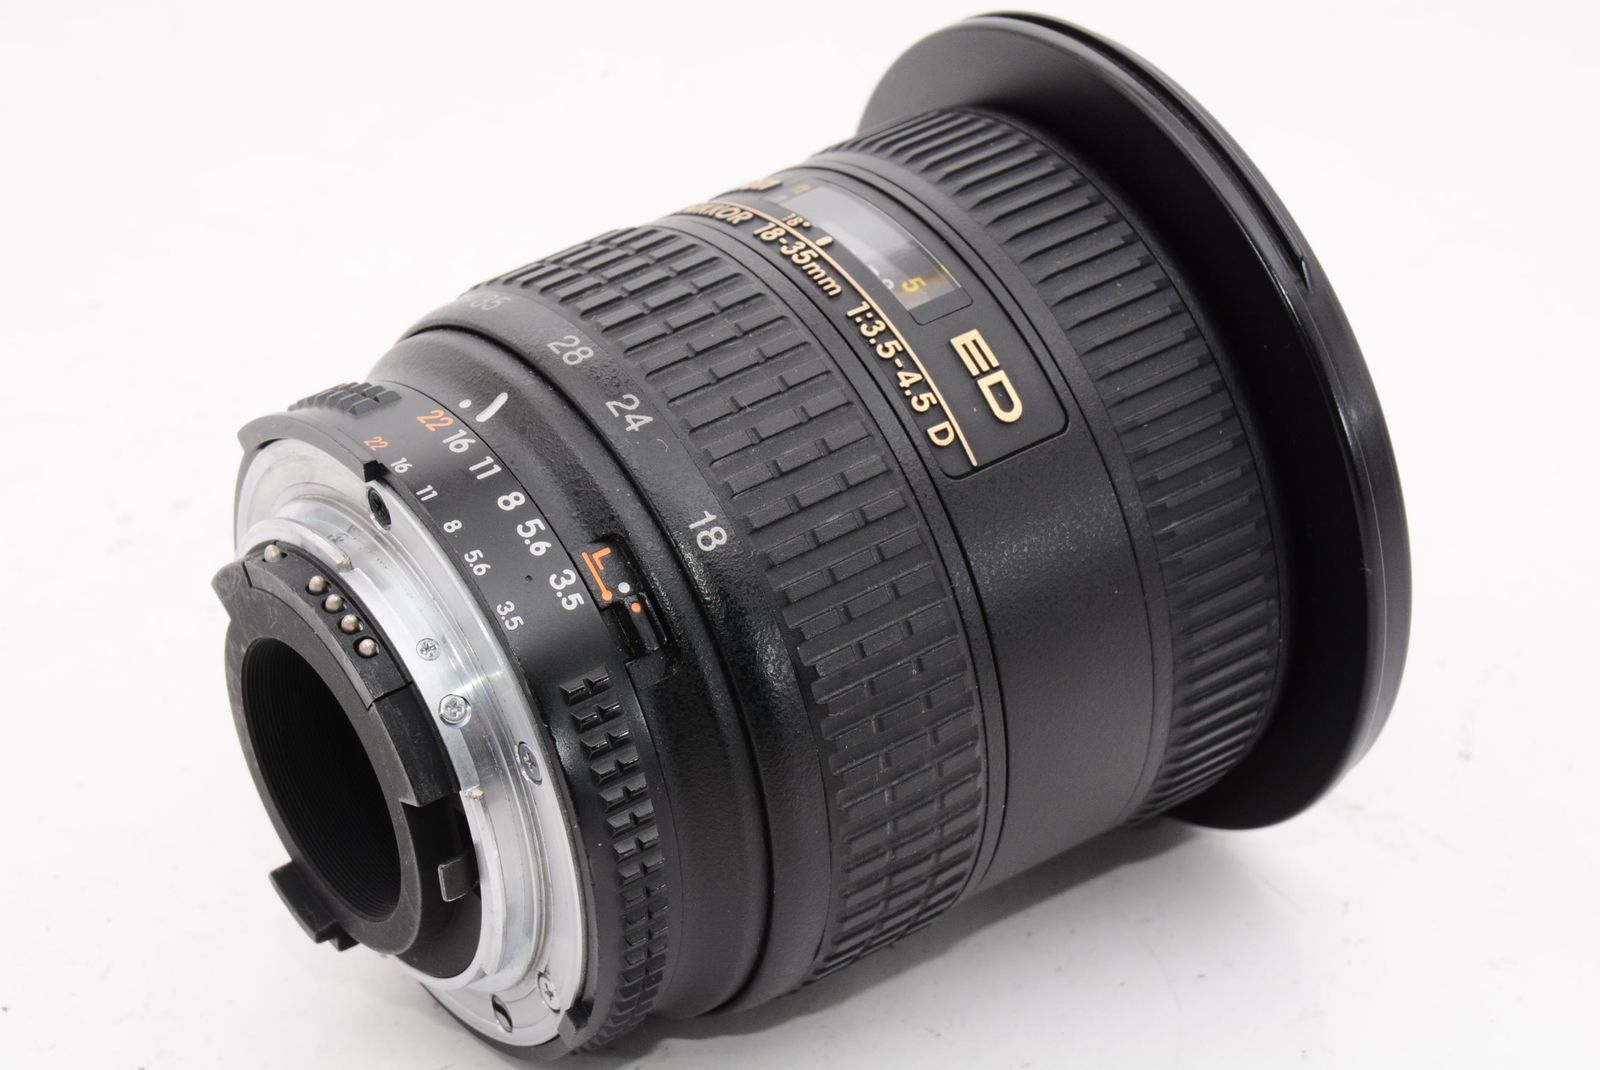 Nikon AF ズームニッコール ED18-35 F3.5-4.5D (IF)